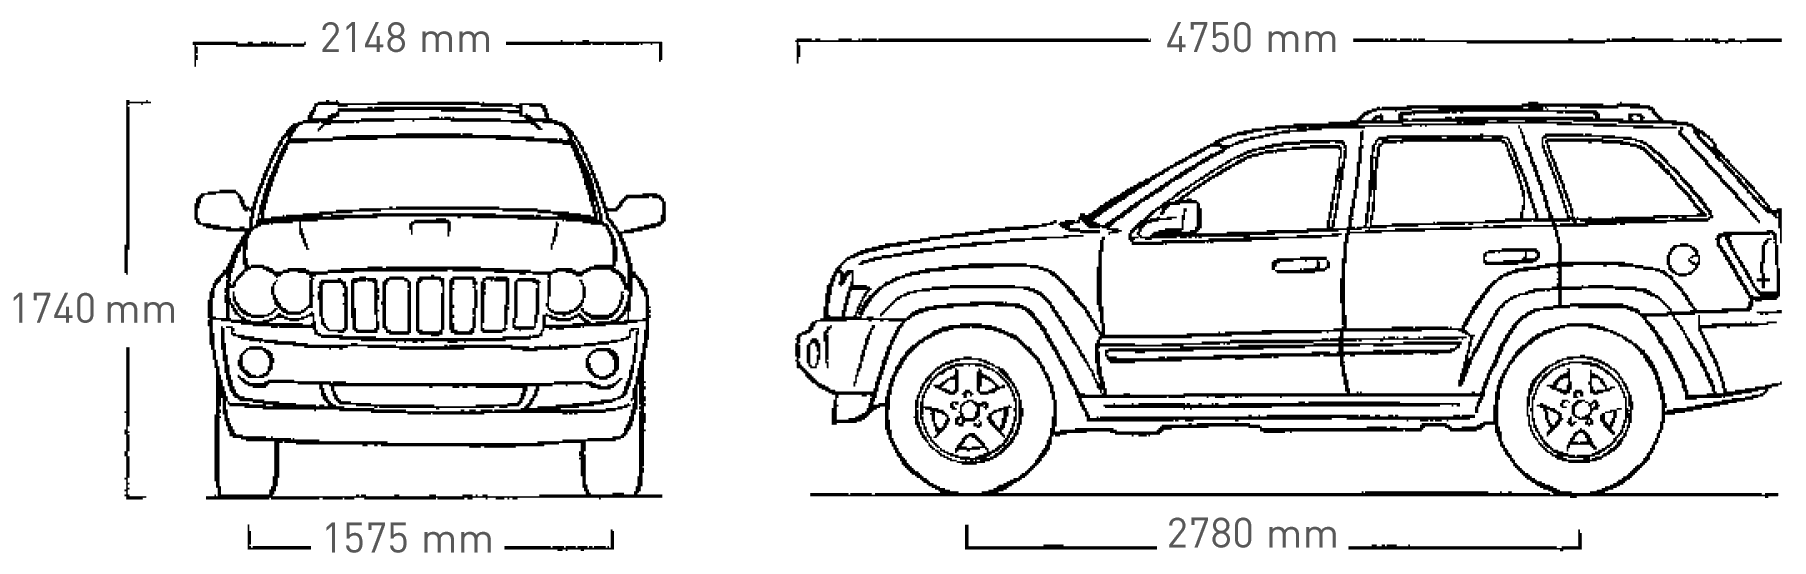 Jeep grand cherokee drawings #3